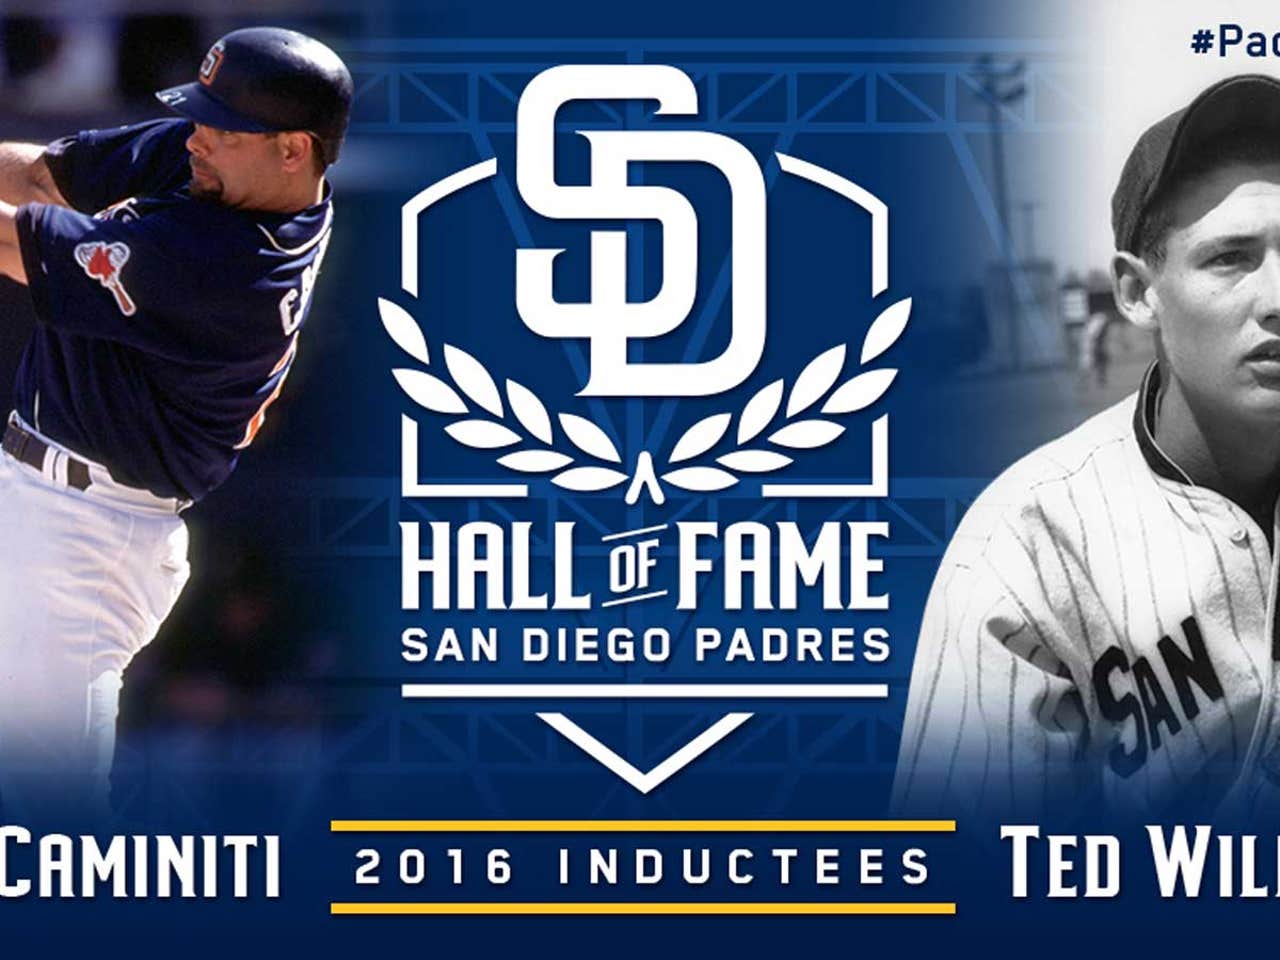 Tony Gwynn, San Diego Padres Hall of Famer and hitting legend